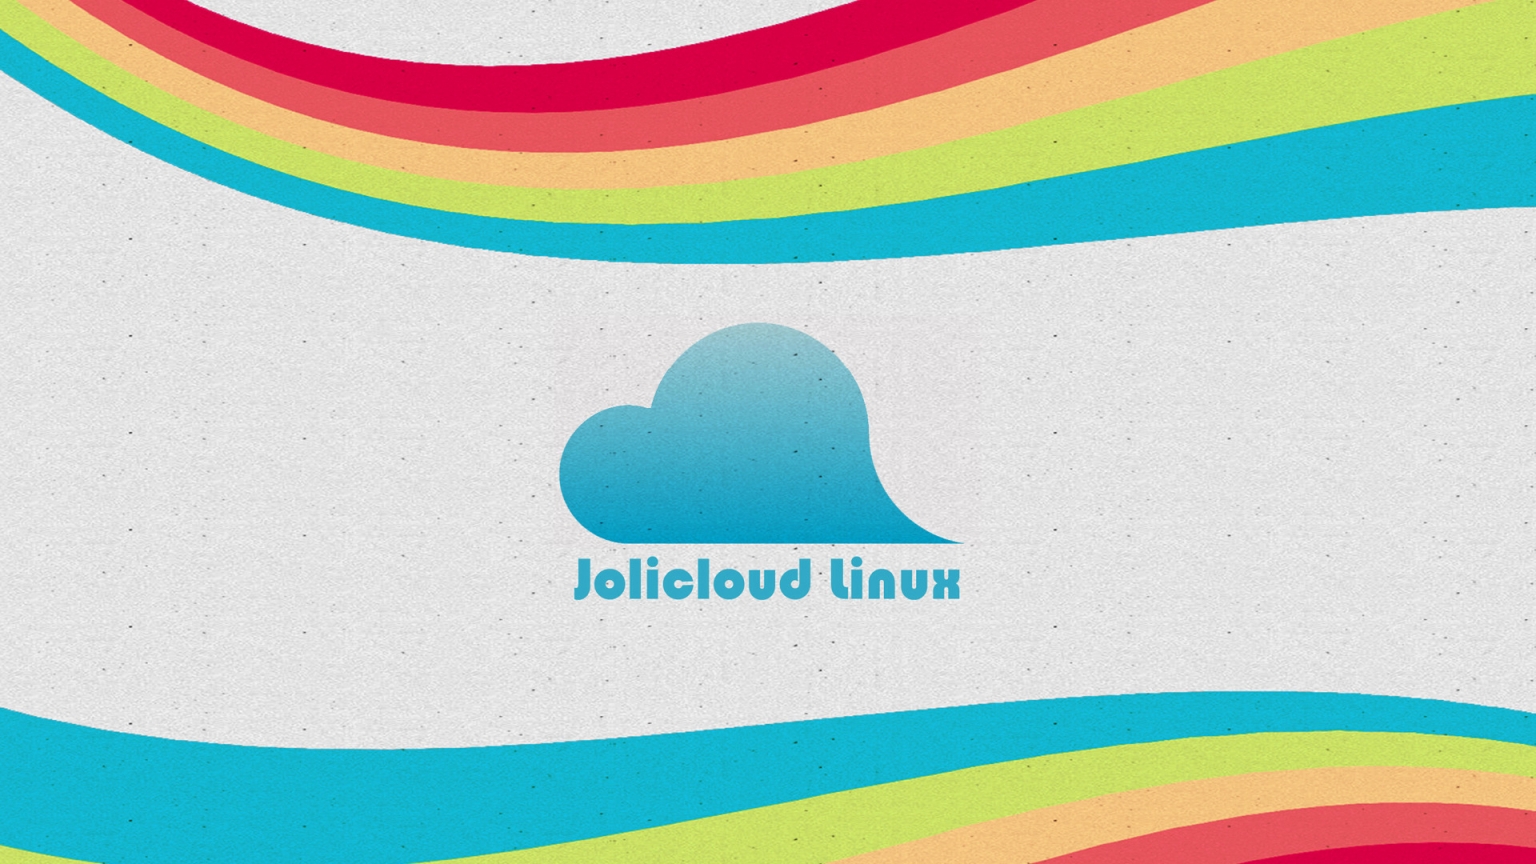 Jolicloud Linux for 1536 x 864 HDTV resolution